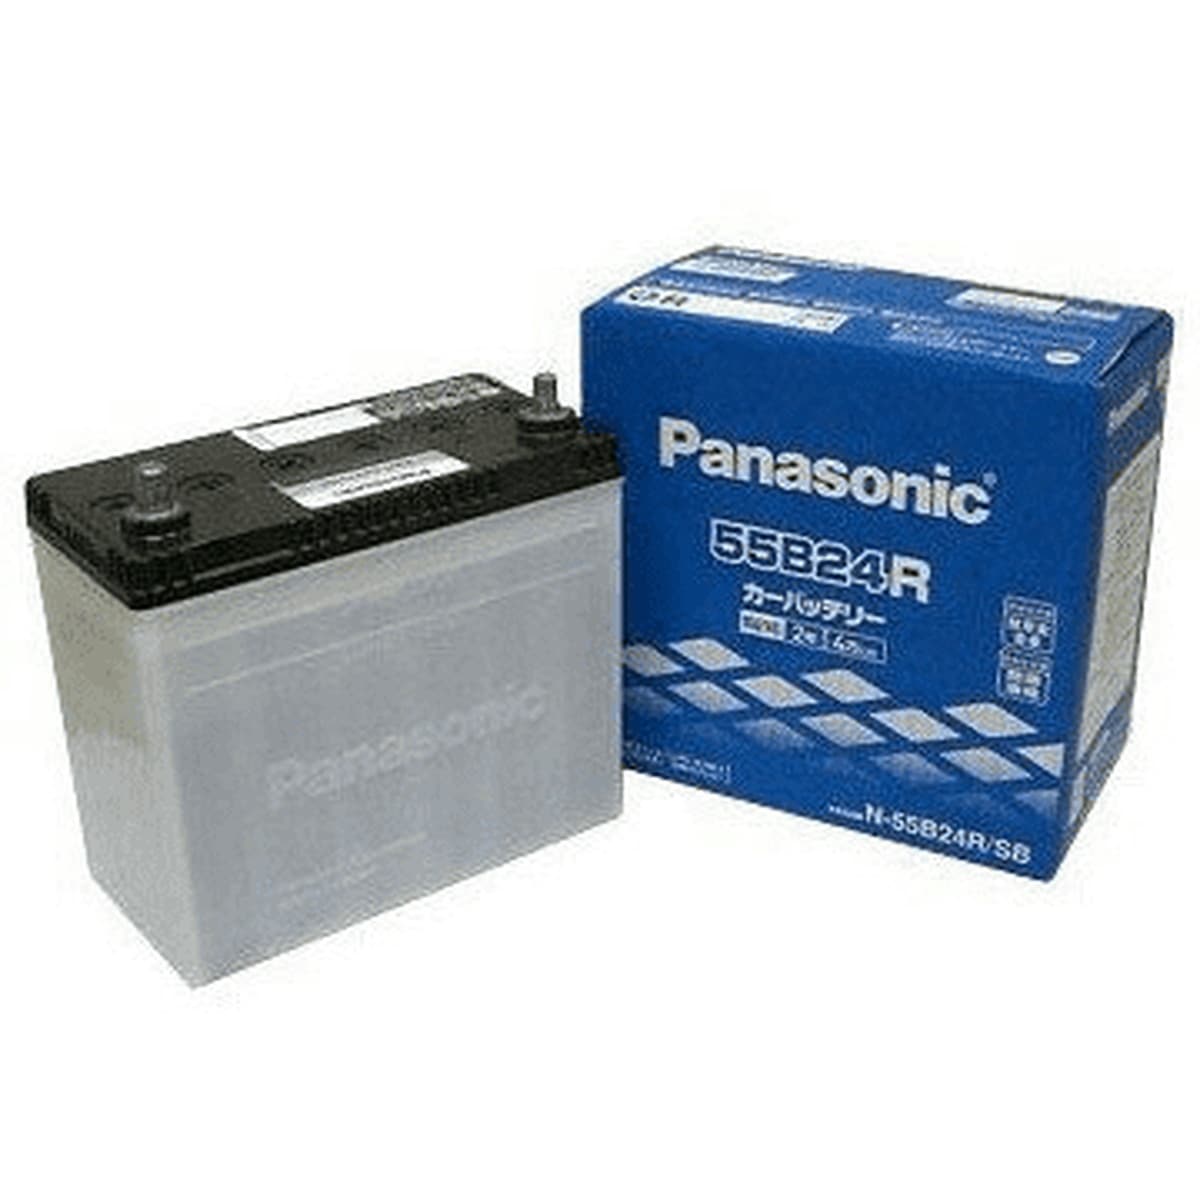 Panasonic N-60B19L/C8 ミツビシ eKスポーツ 搭載(34B19L) PANASONIC カオス ブルーバッテリー 送料無料